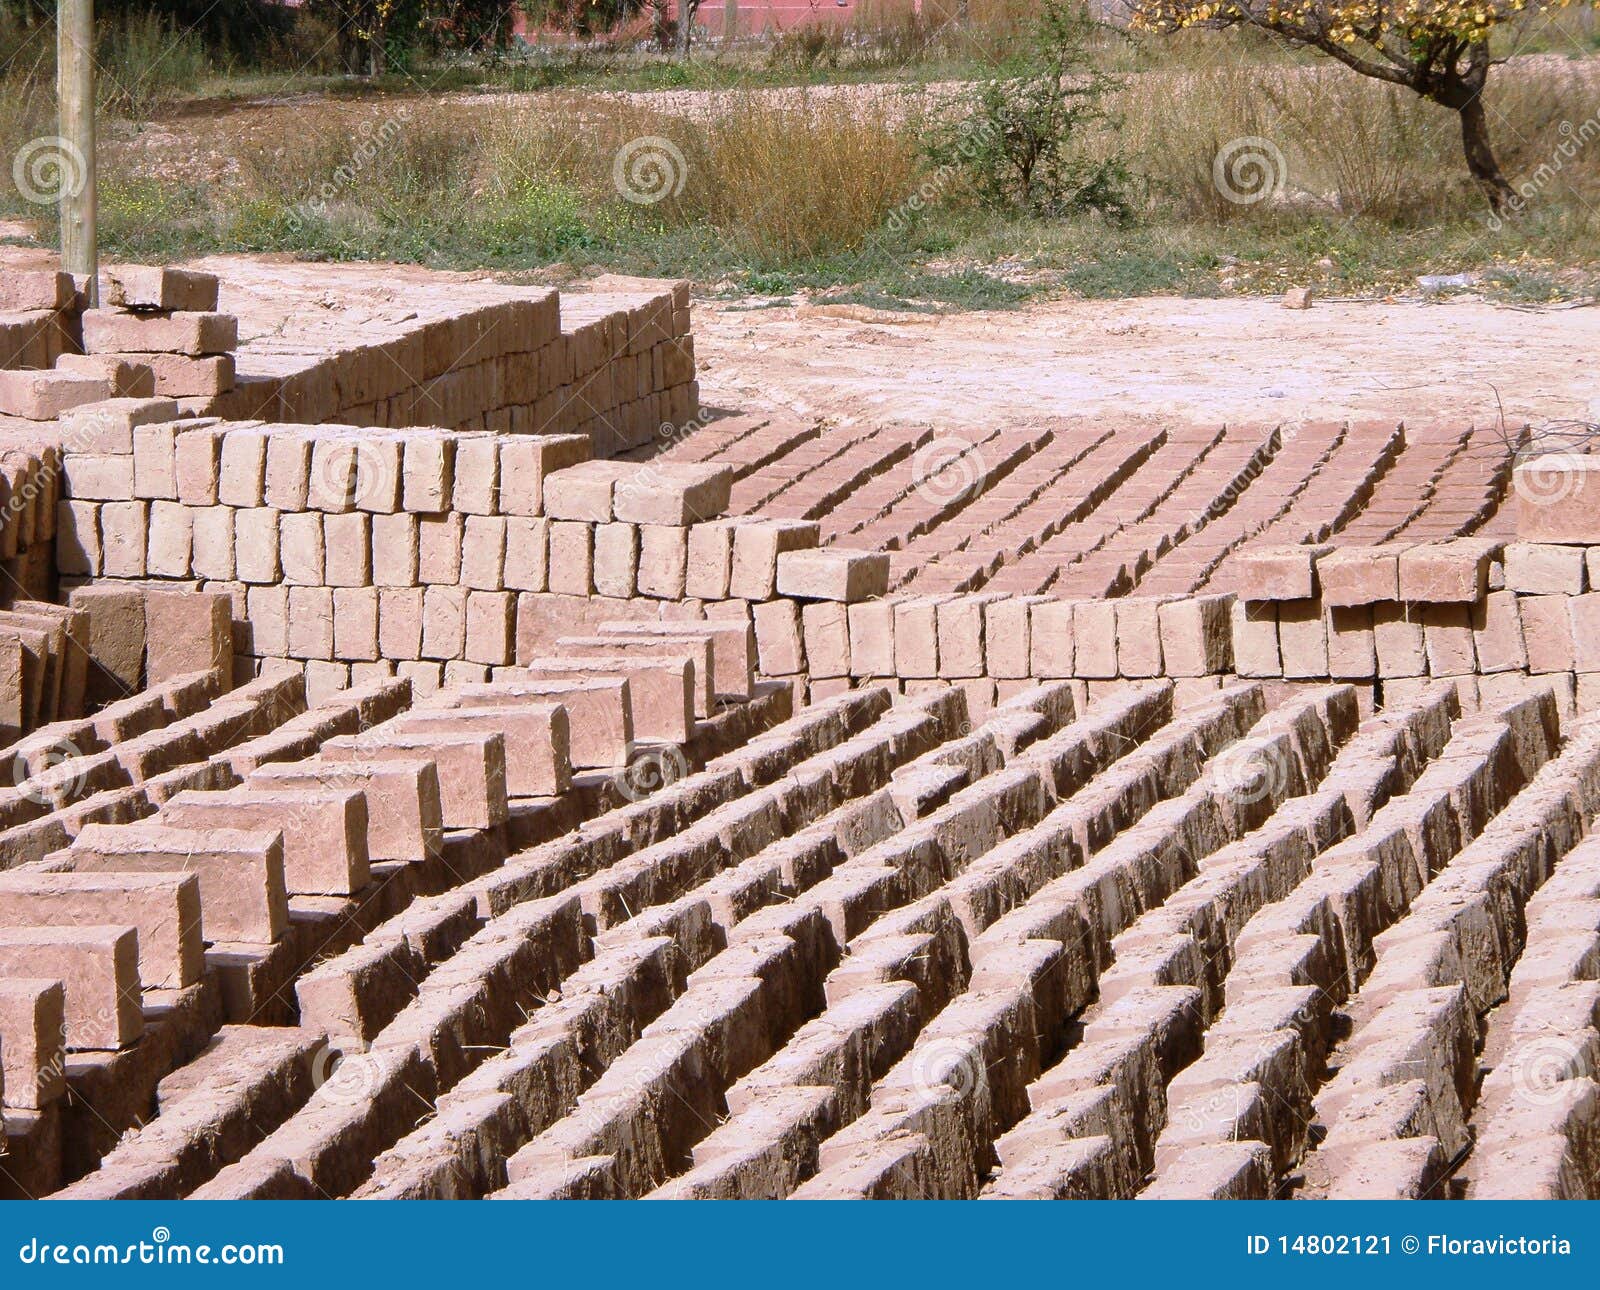 adobe bricks - sustainable building materials 2